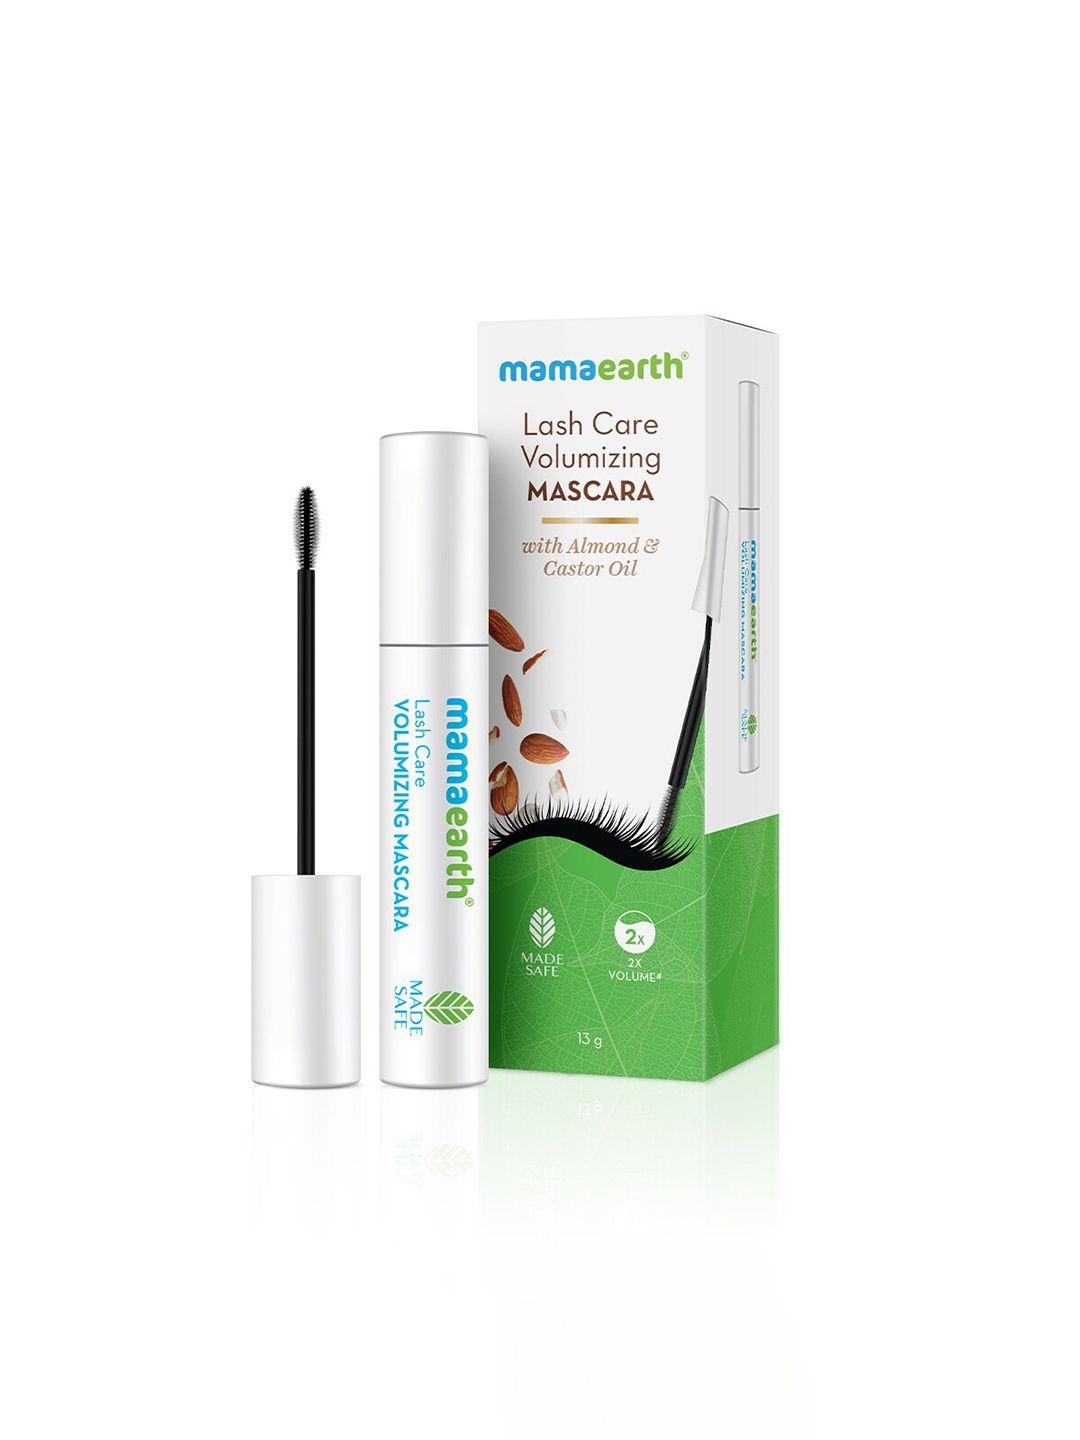 mamaearth lash care with almond & castor oil volumizing mascara 13g